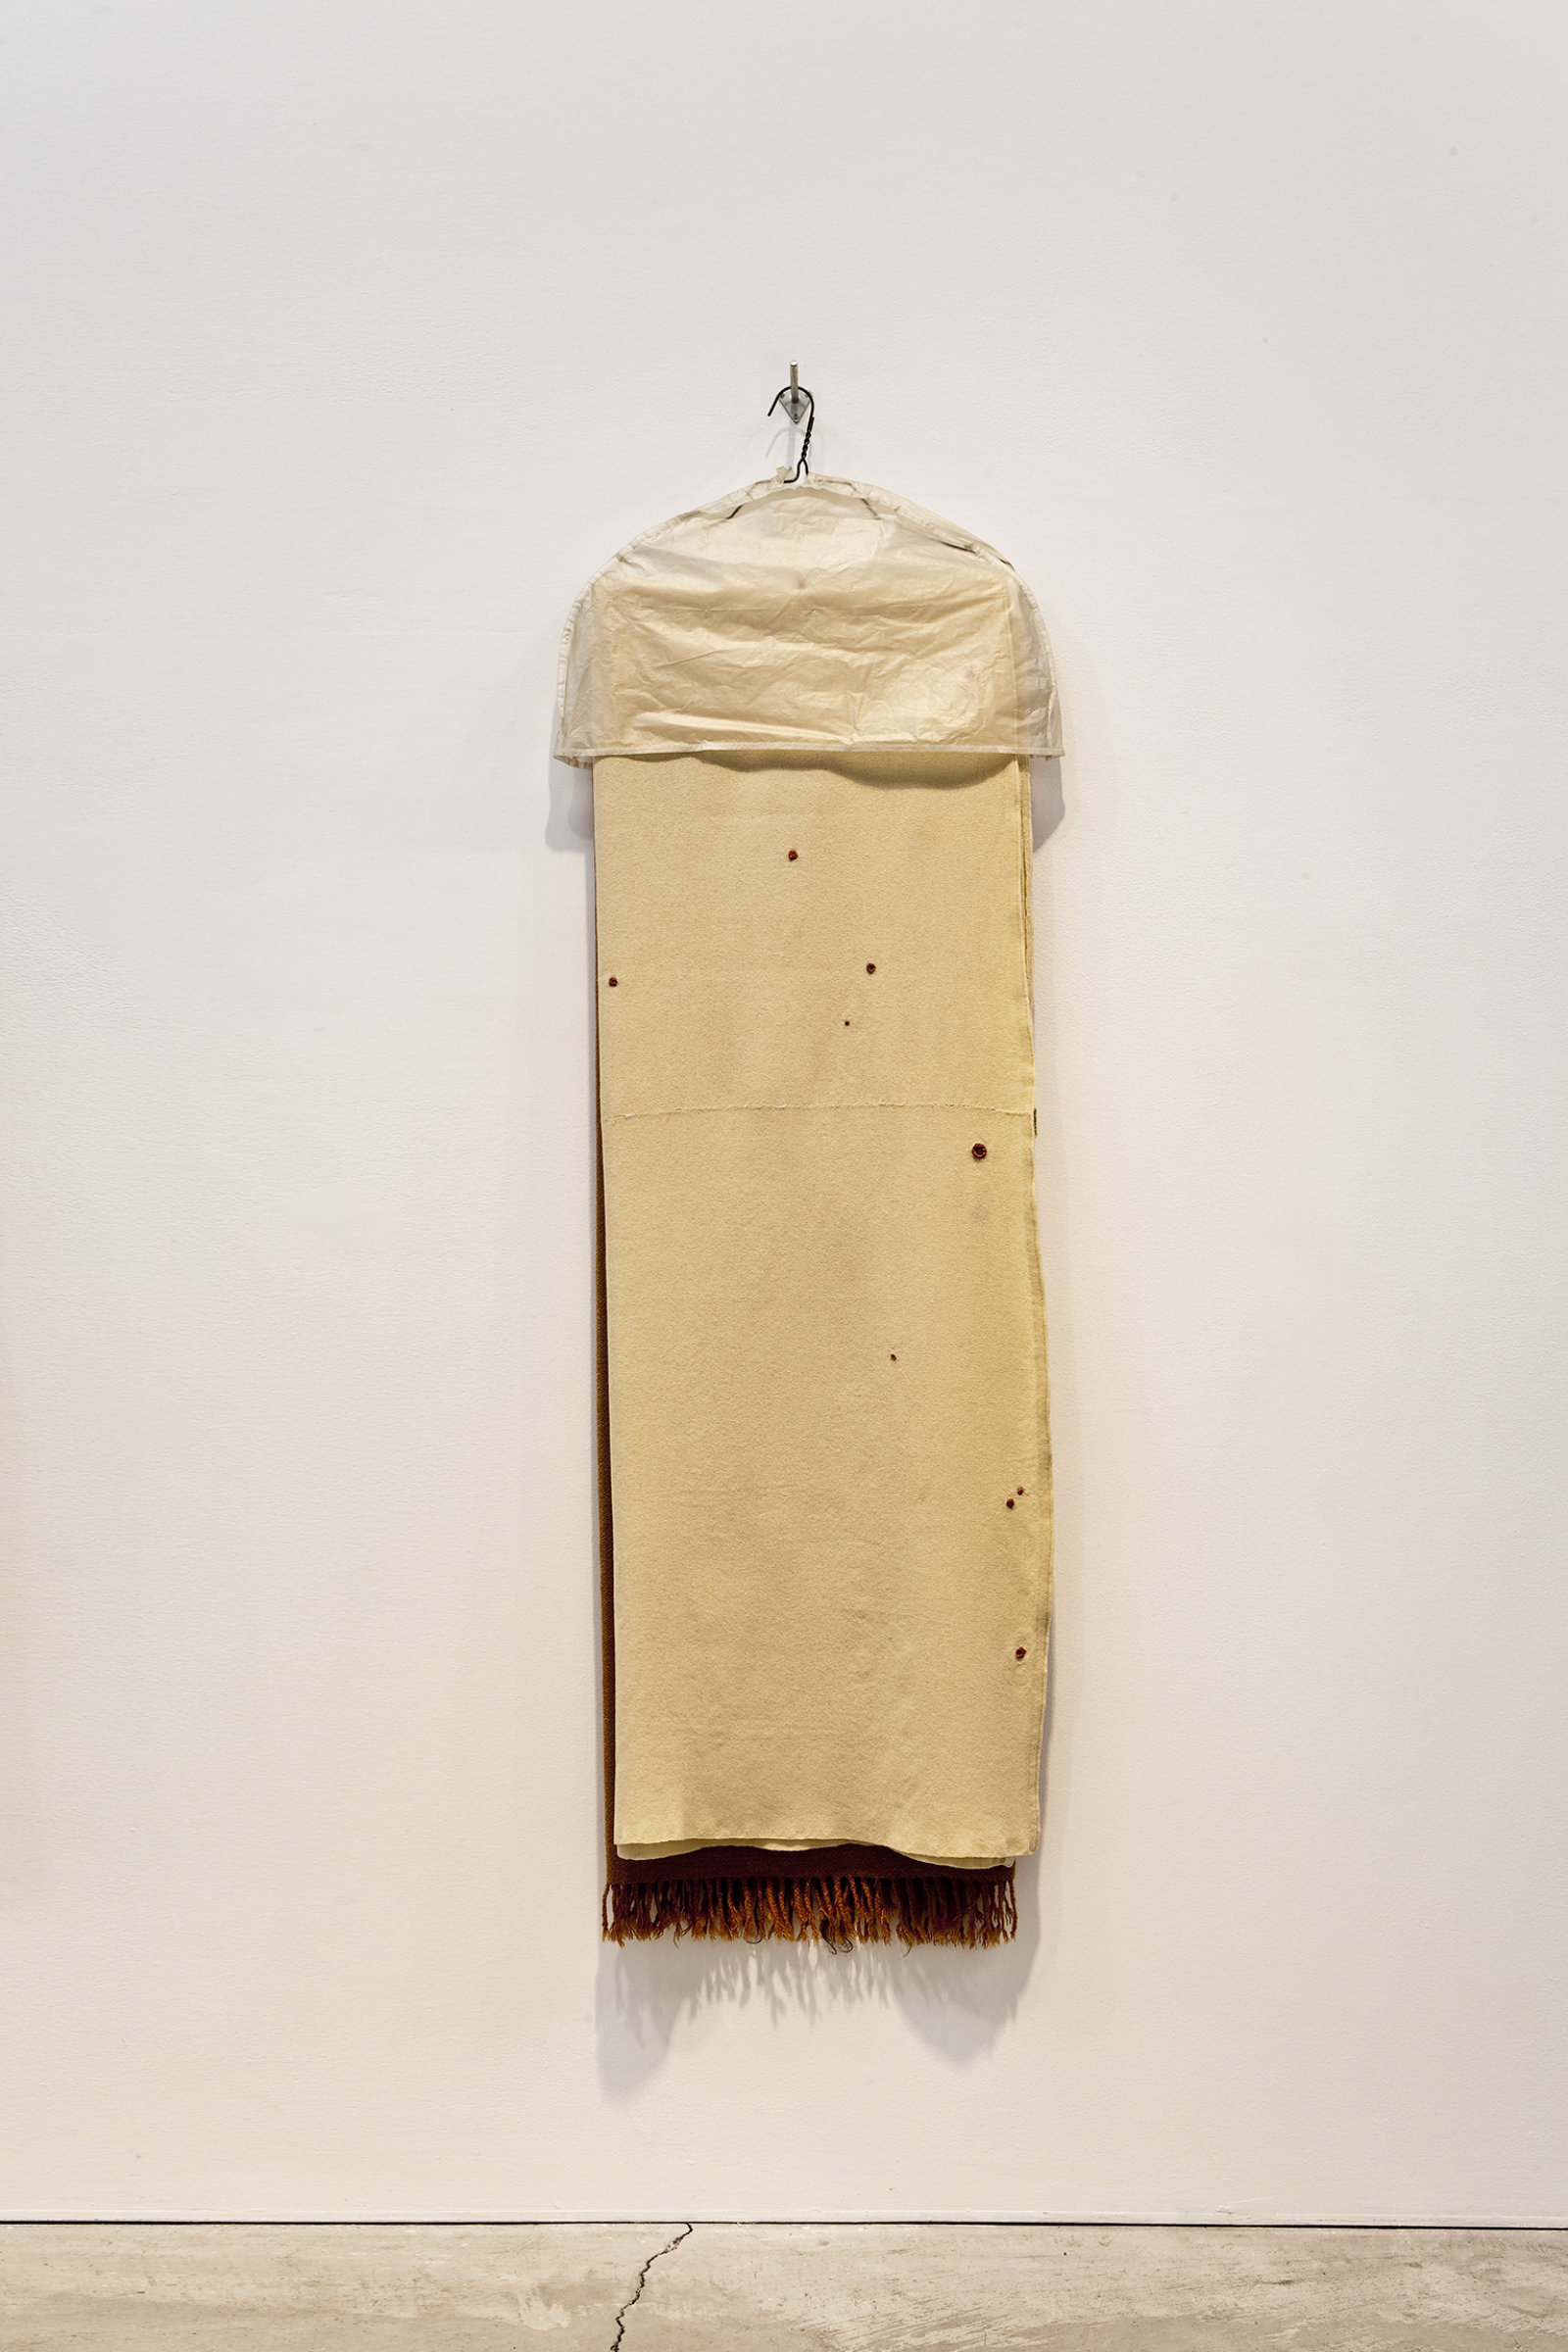 Liz Magor, Moth-proofed, 2011, wool, hair, metal, plastic, polymerized gypsum, thread, 66 x 22 x 6 in. (168 x 56 x 7 cm). Photo: Toni Hafkenscheid